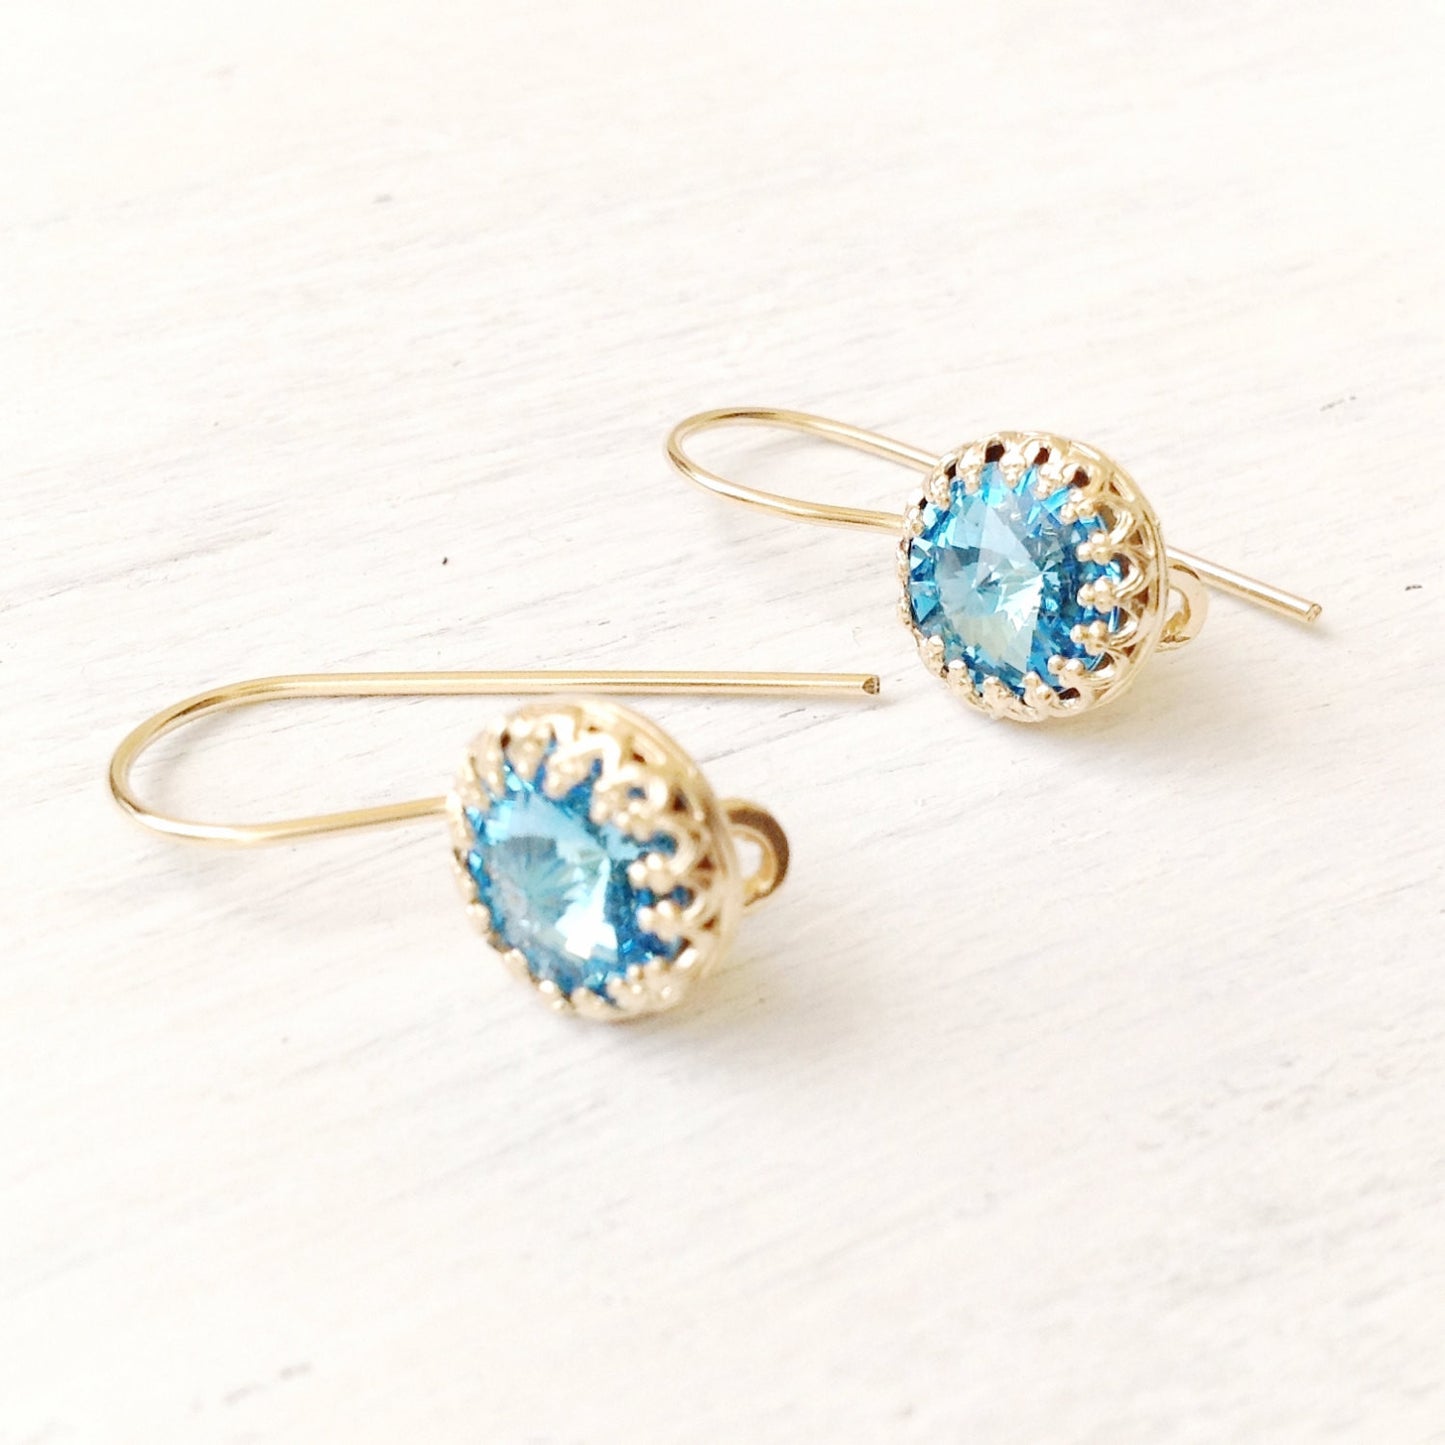 Aquamarine Earrings Blue swarovski crystal 14k gold filled jewelry